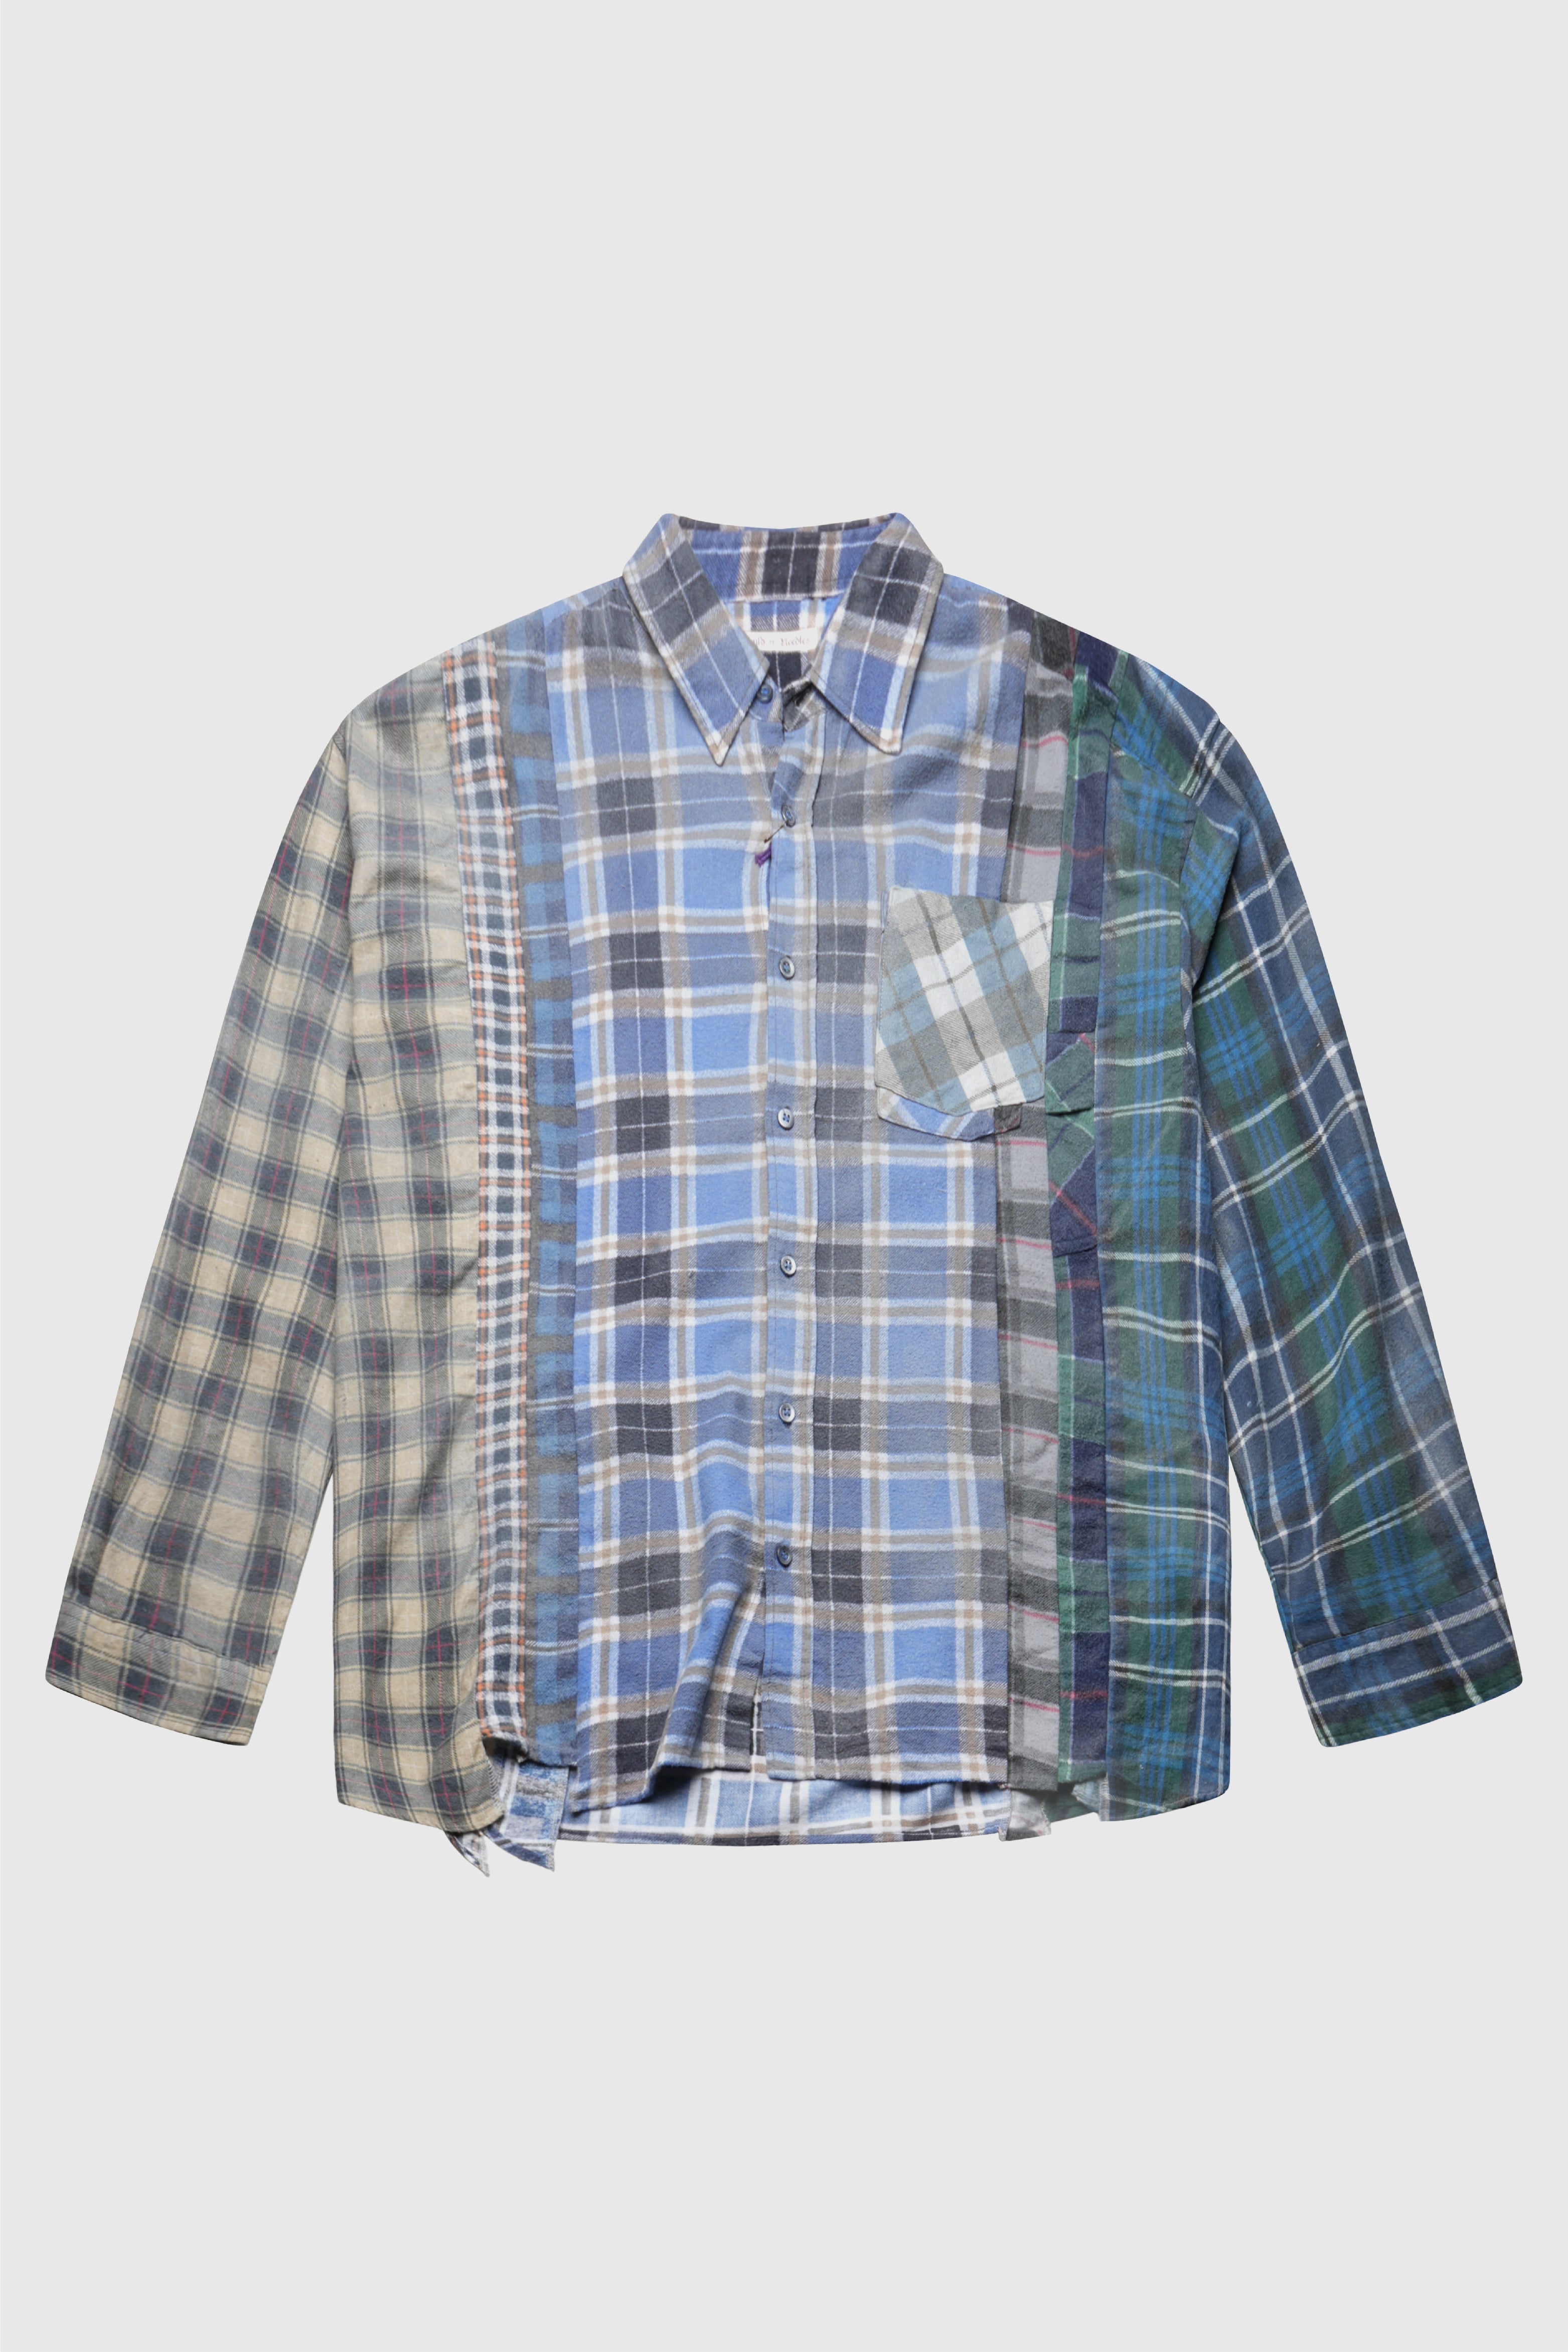 Selectshop FRAME - NEEDLES Reflection 7 Cuts Wide Flannel Shirt -(A) Shirts Concept Store Dubai